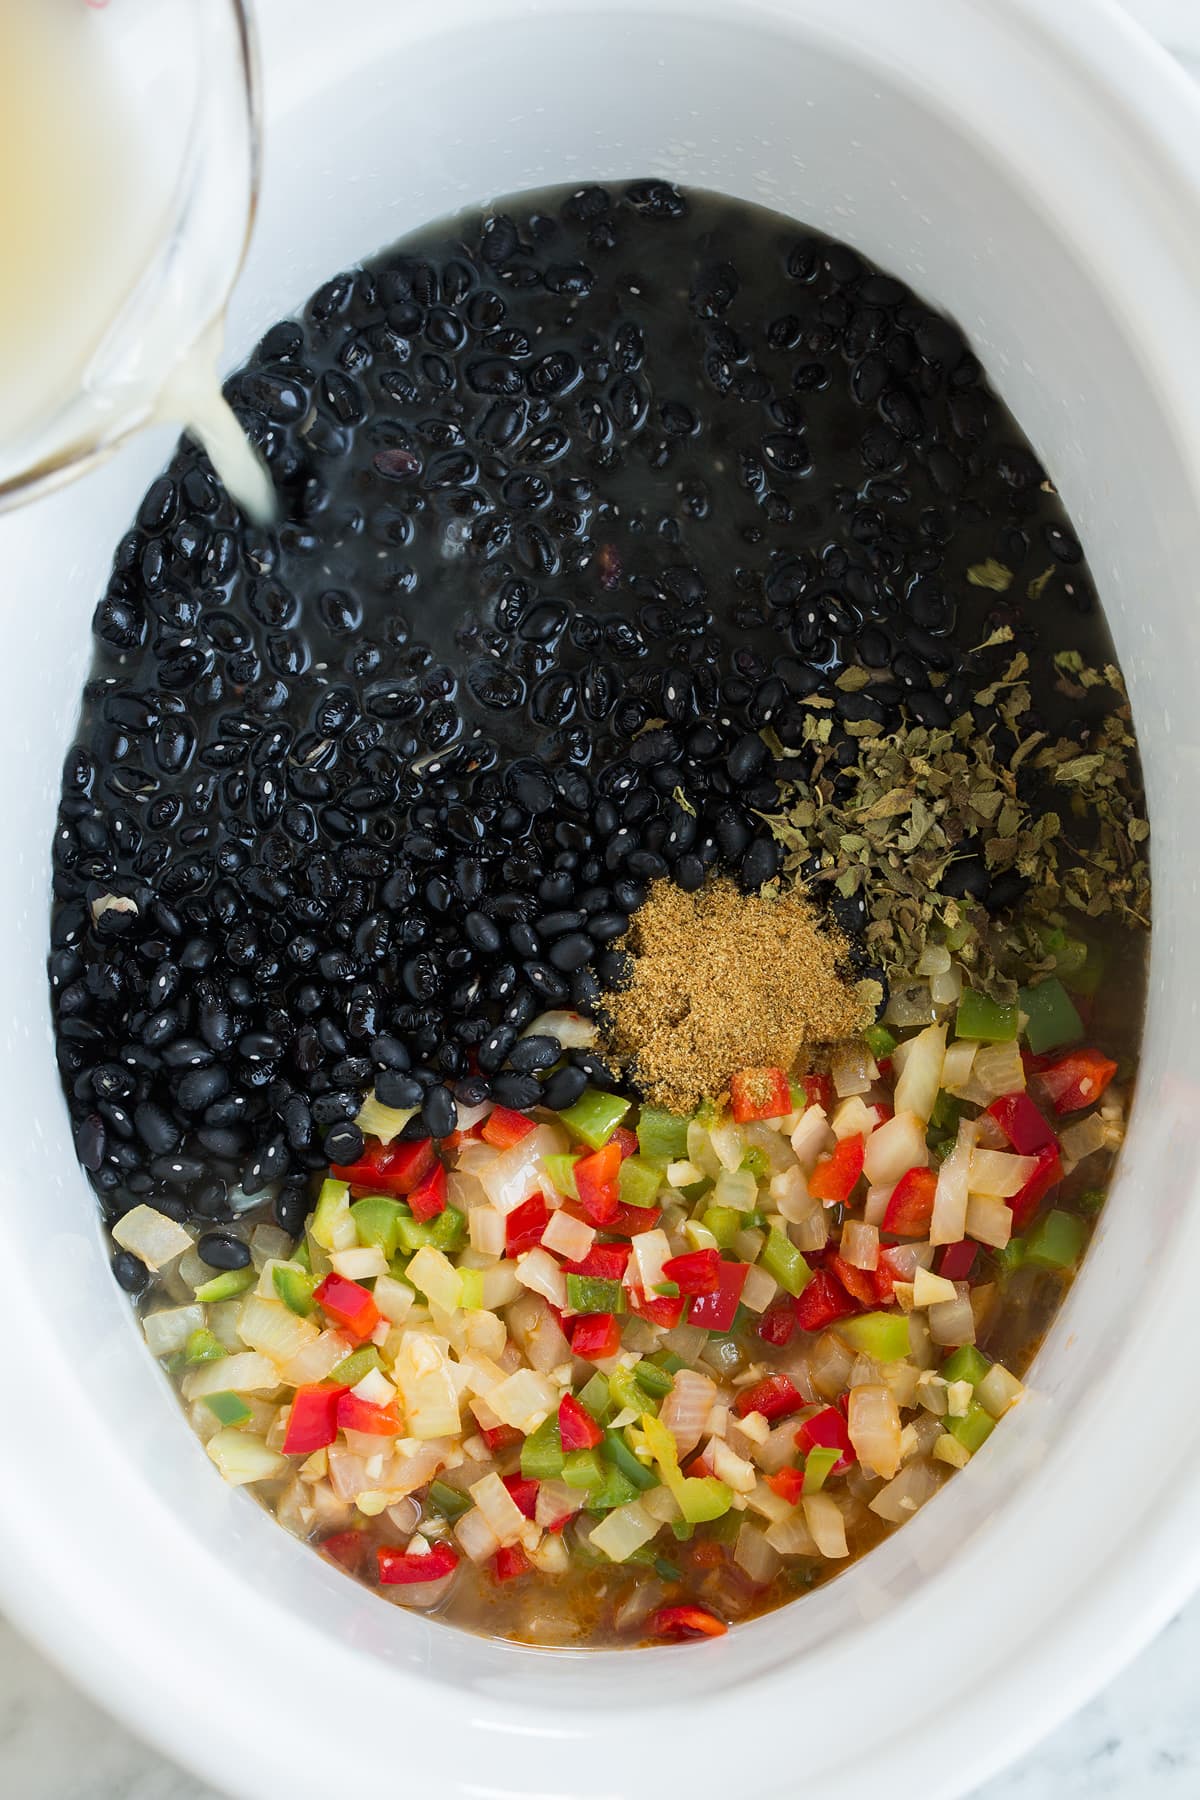 How to Make Black Beans